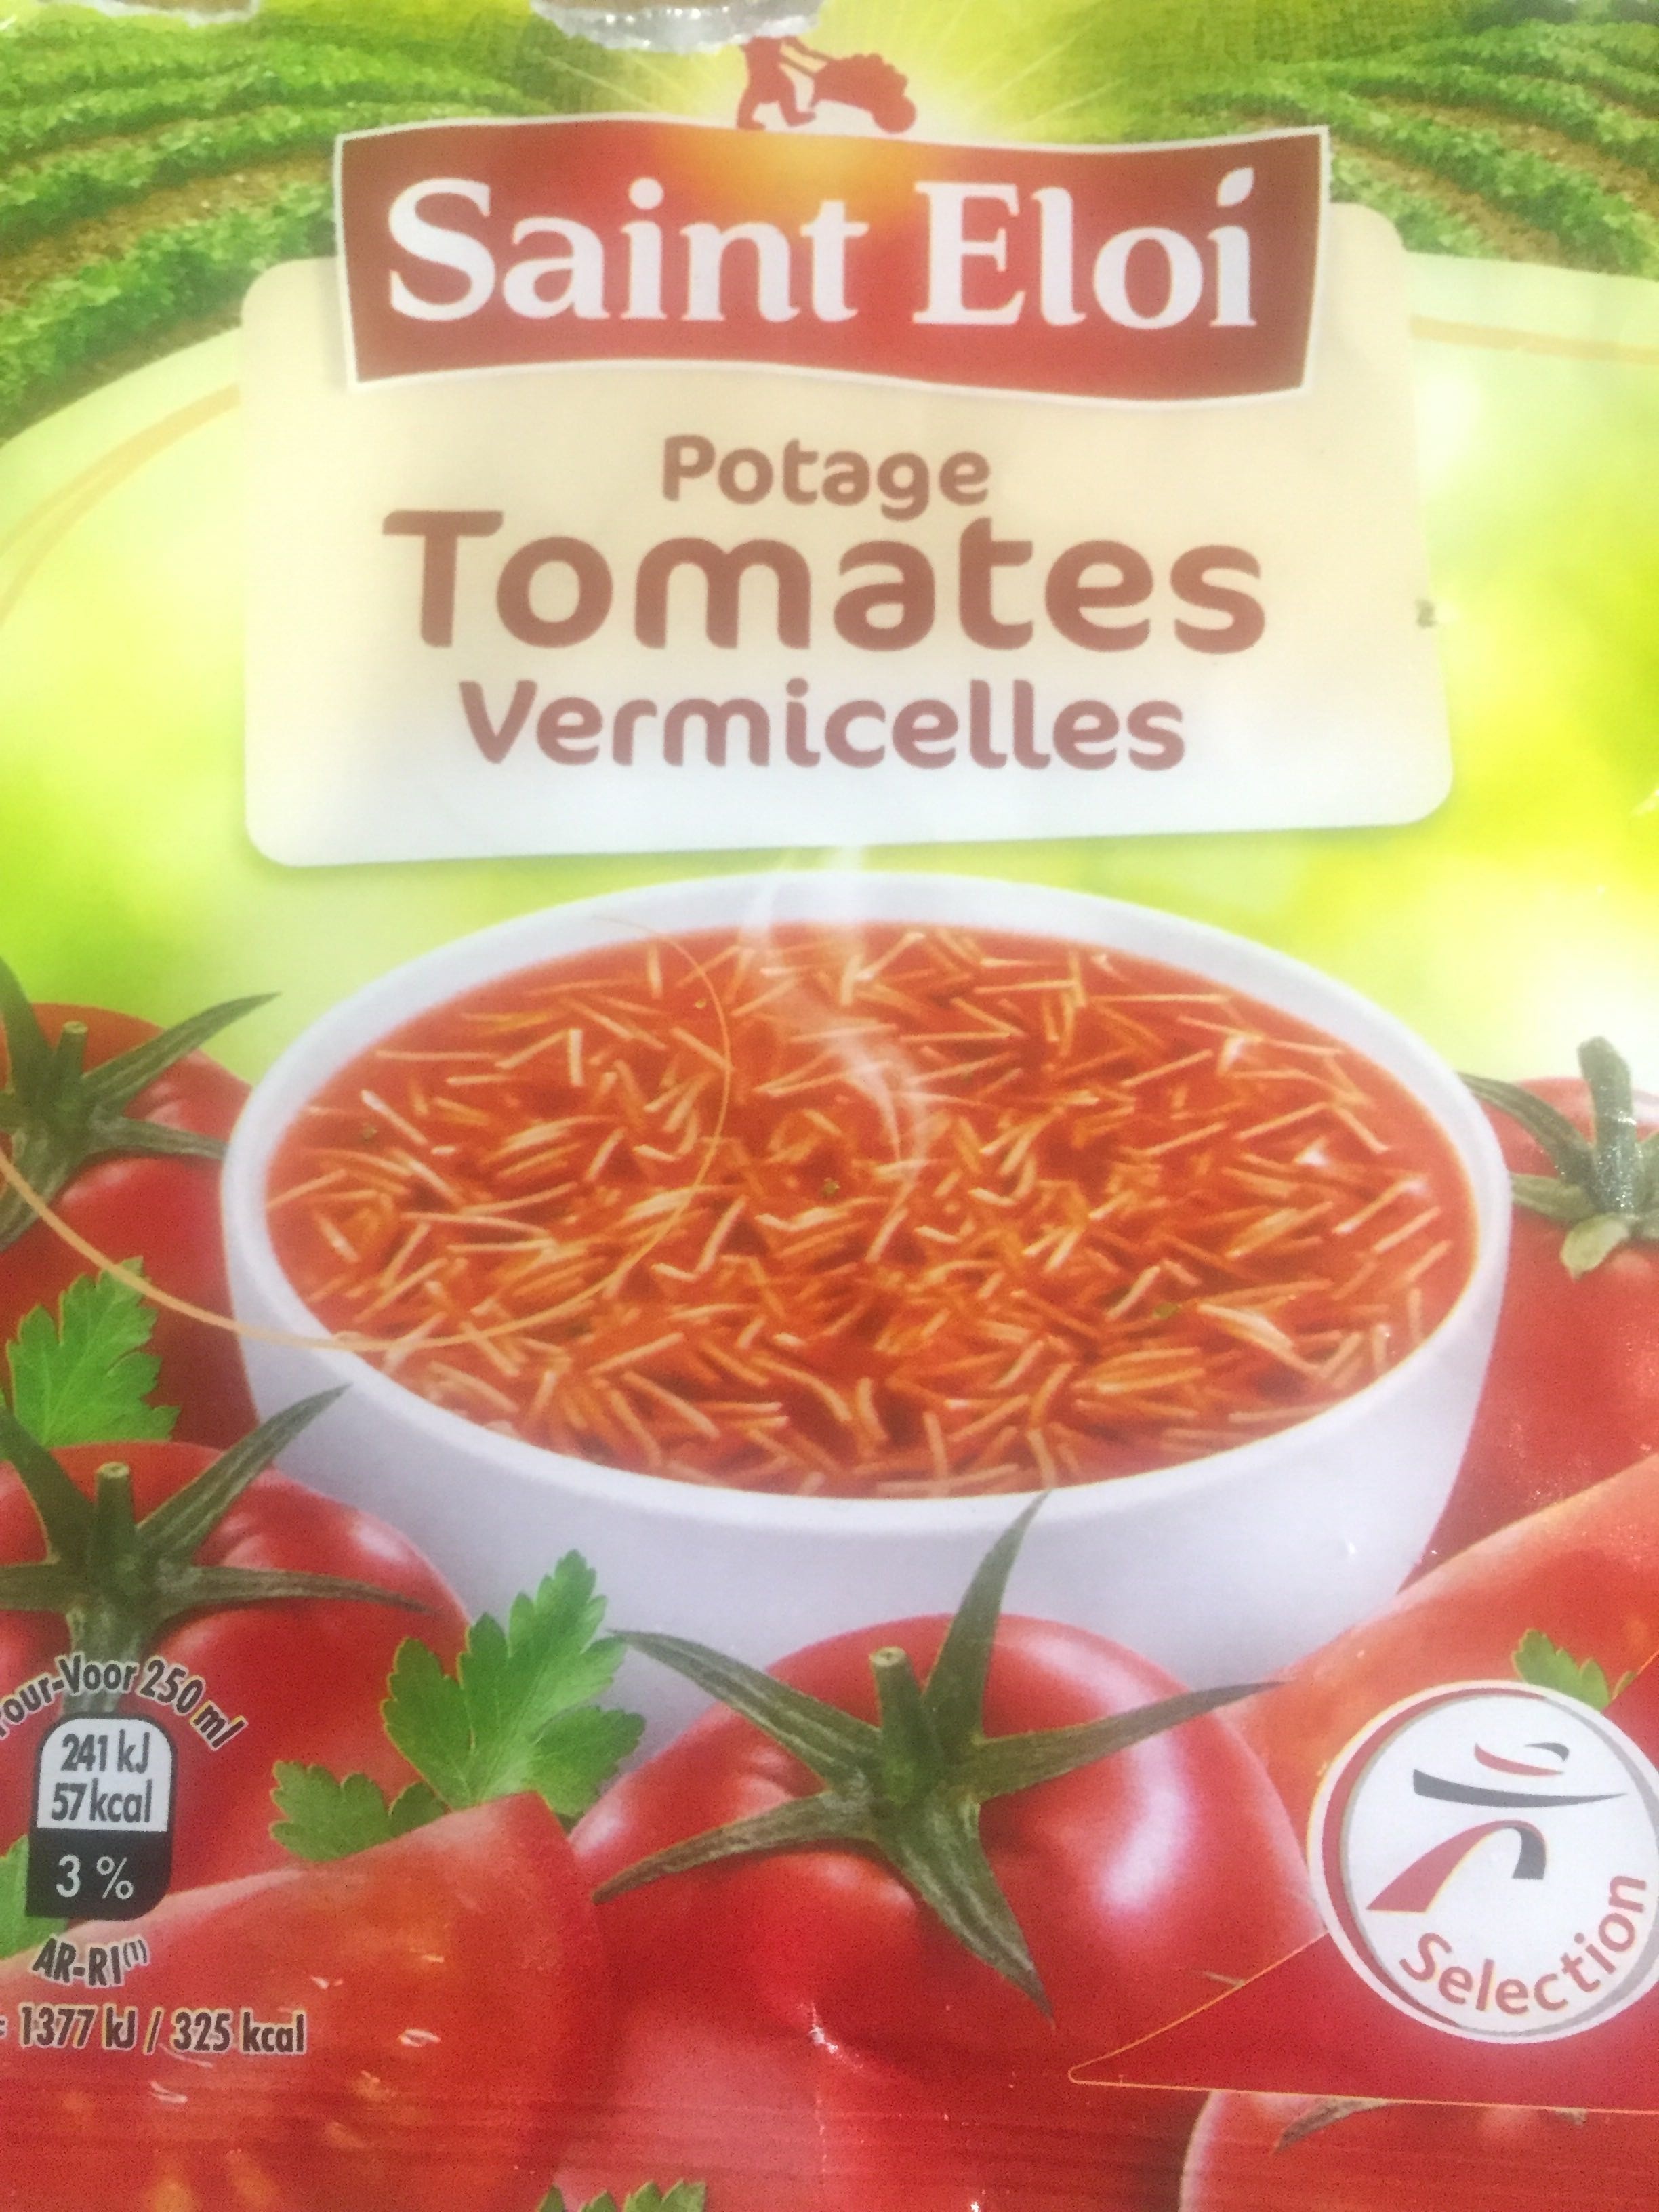 Potage tomate vermicelles - Product - fr